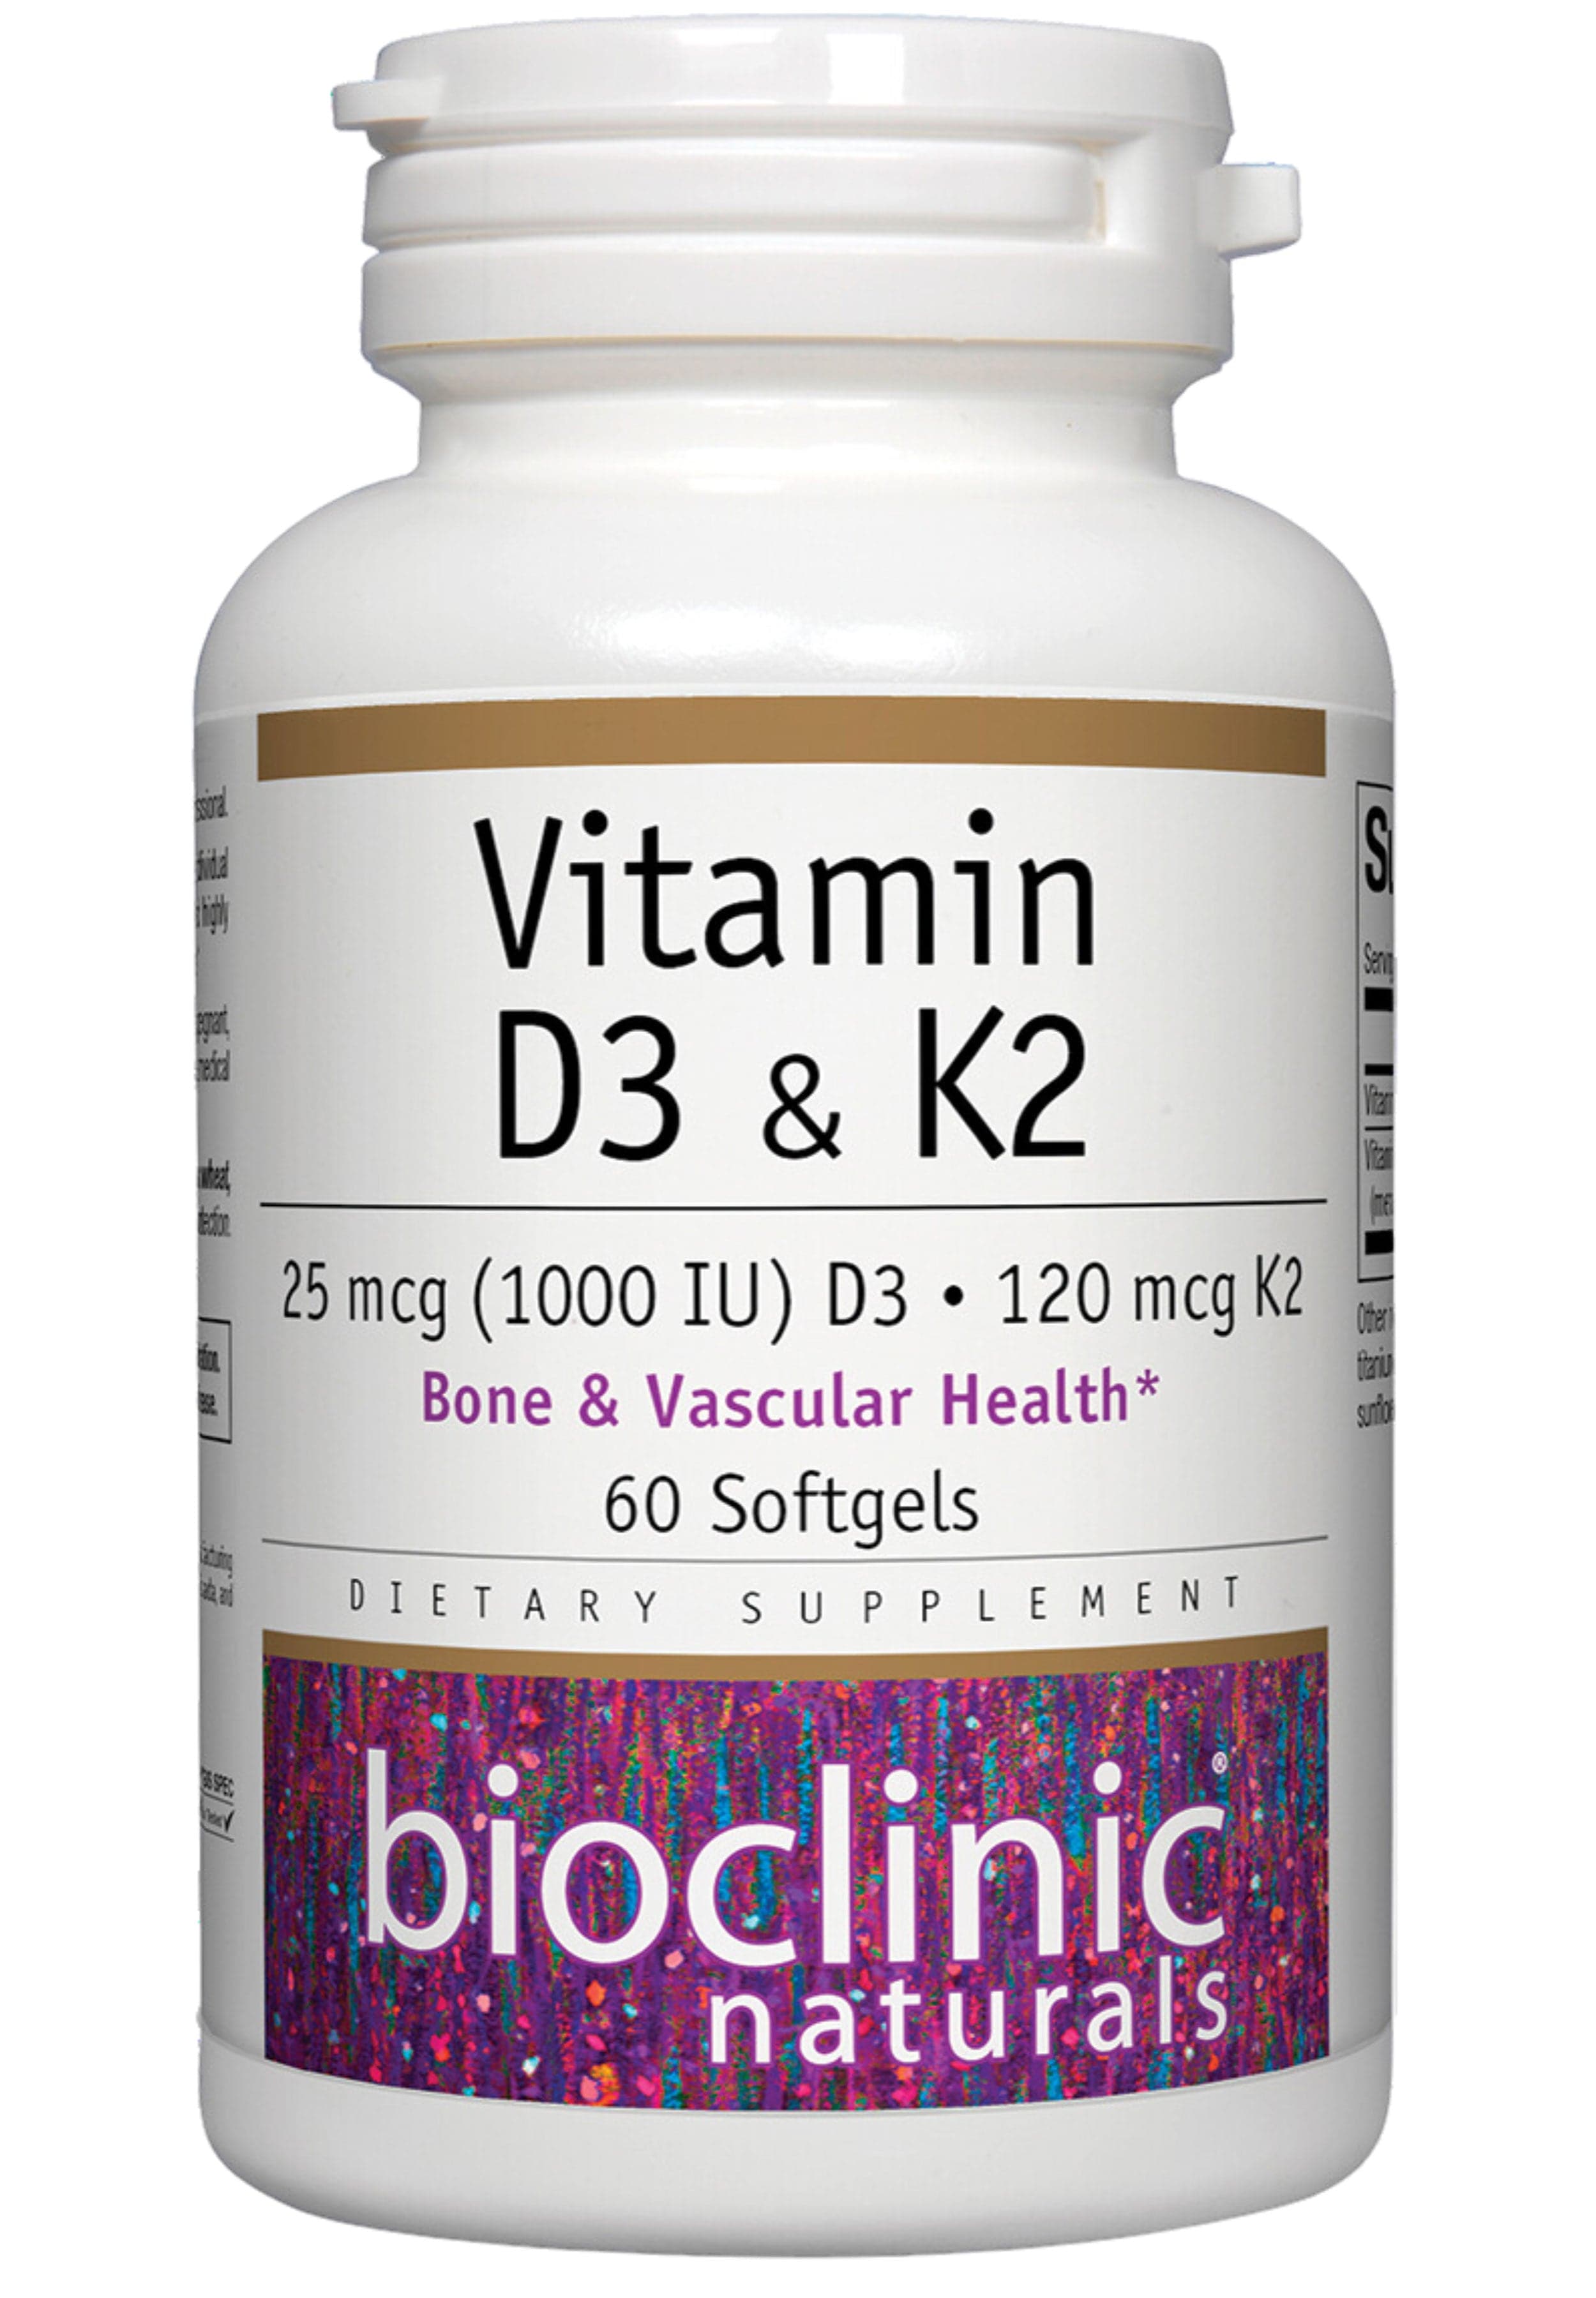 Bioclinic Naturals Vitamin D3 & K2